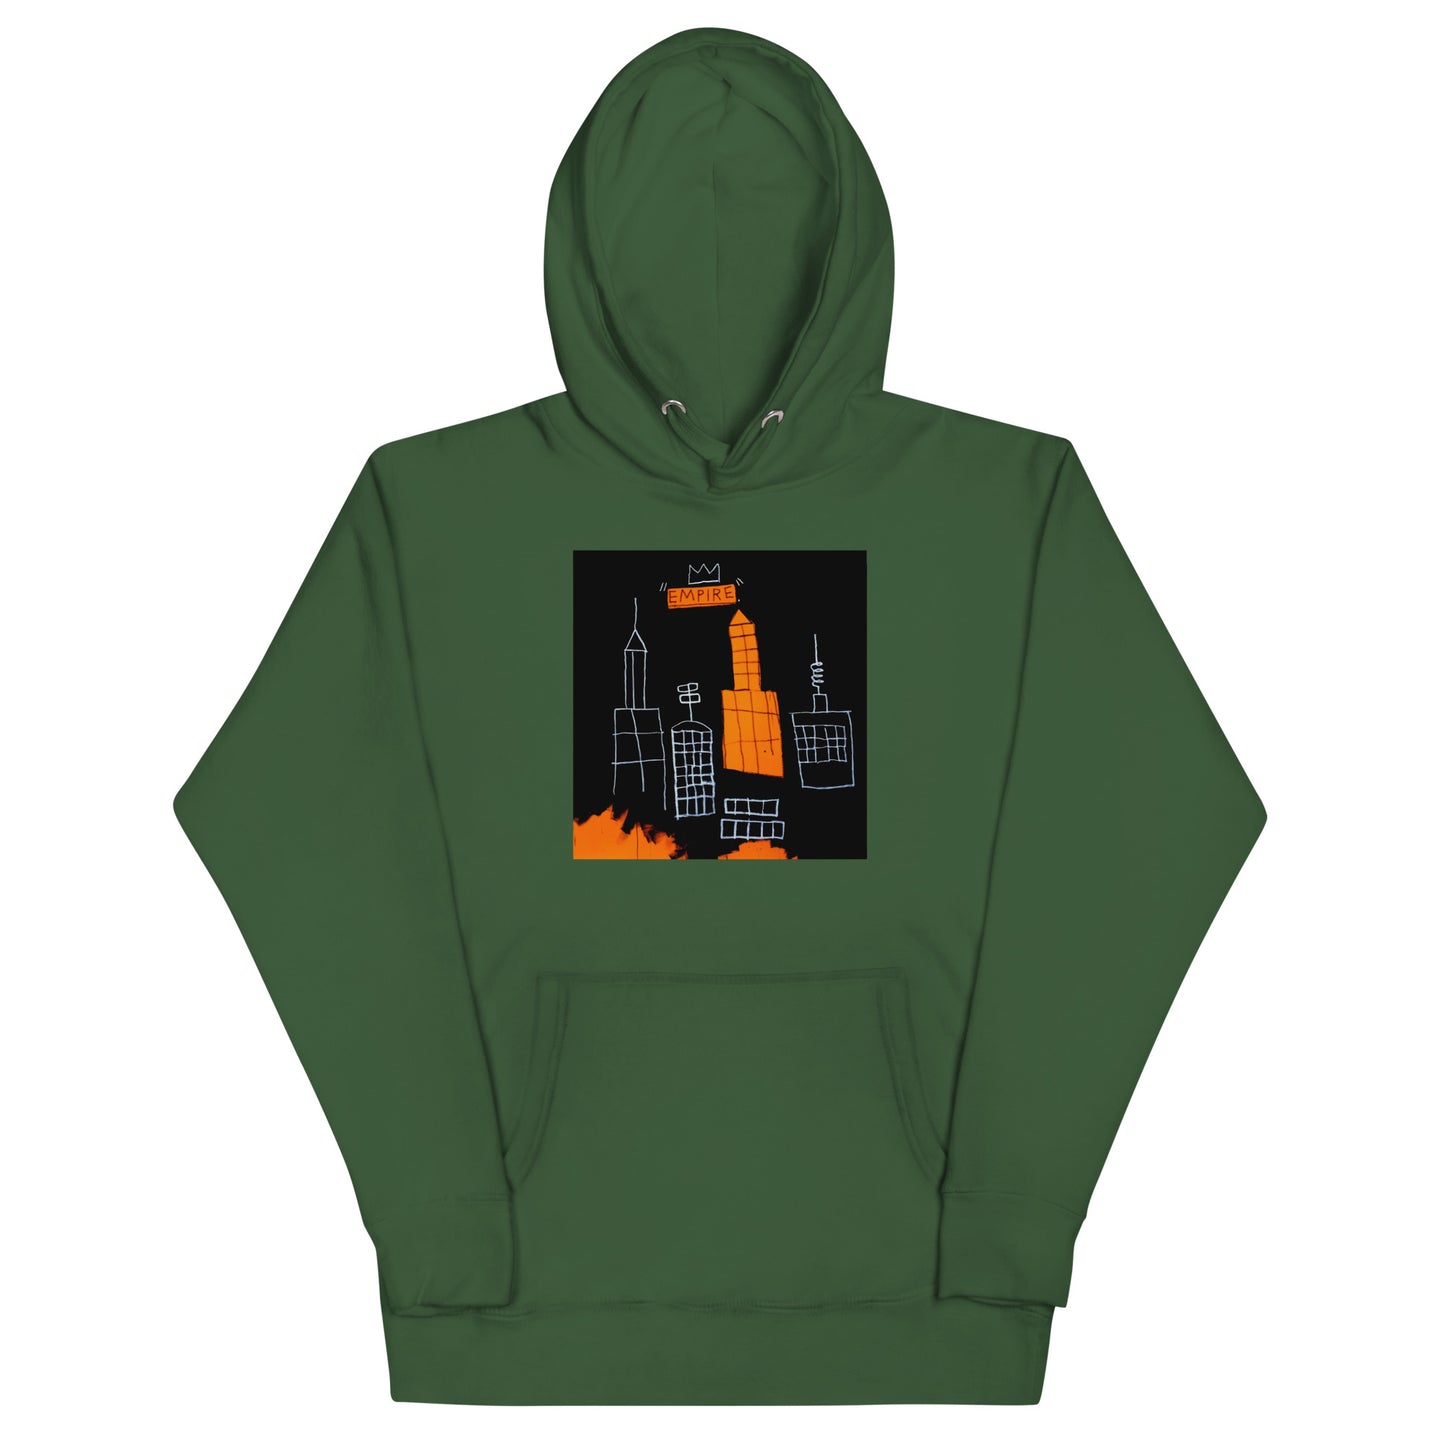 Jean-Michel Basquiat "Mecca" Artwork Printed Premium Streetwear Sweatshirt Hoodie Forest Green